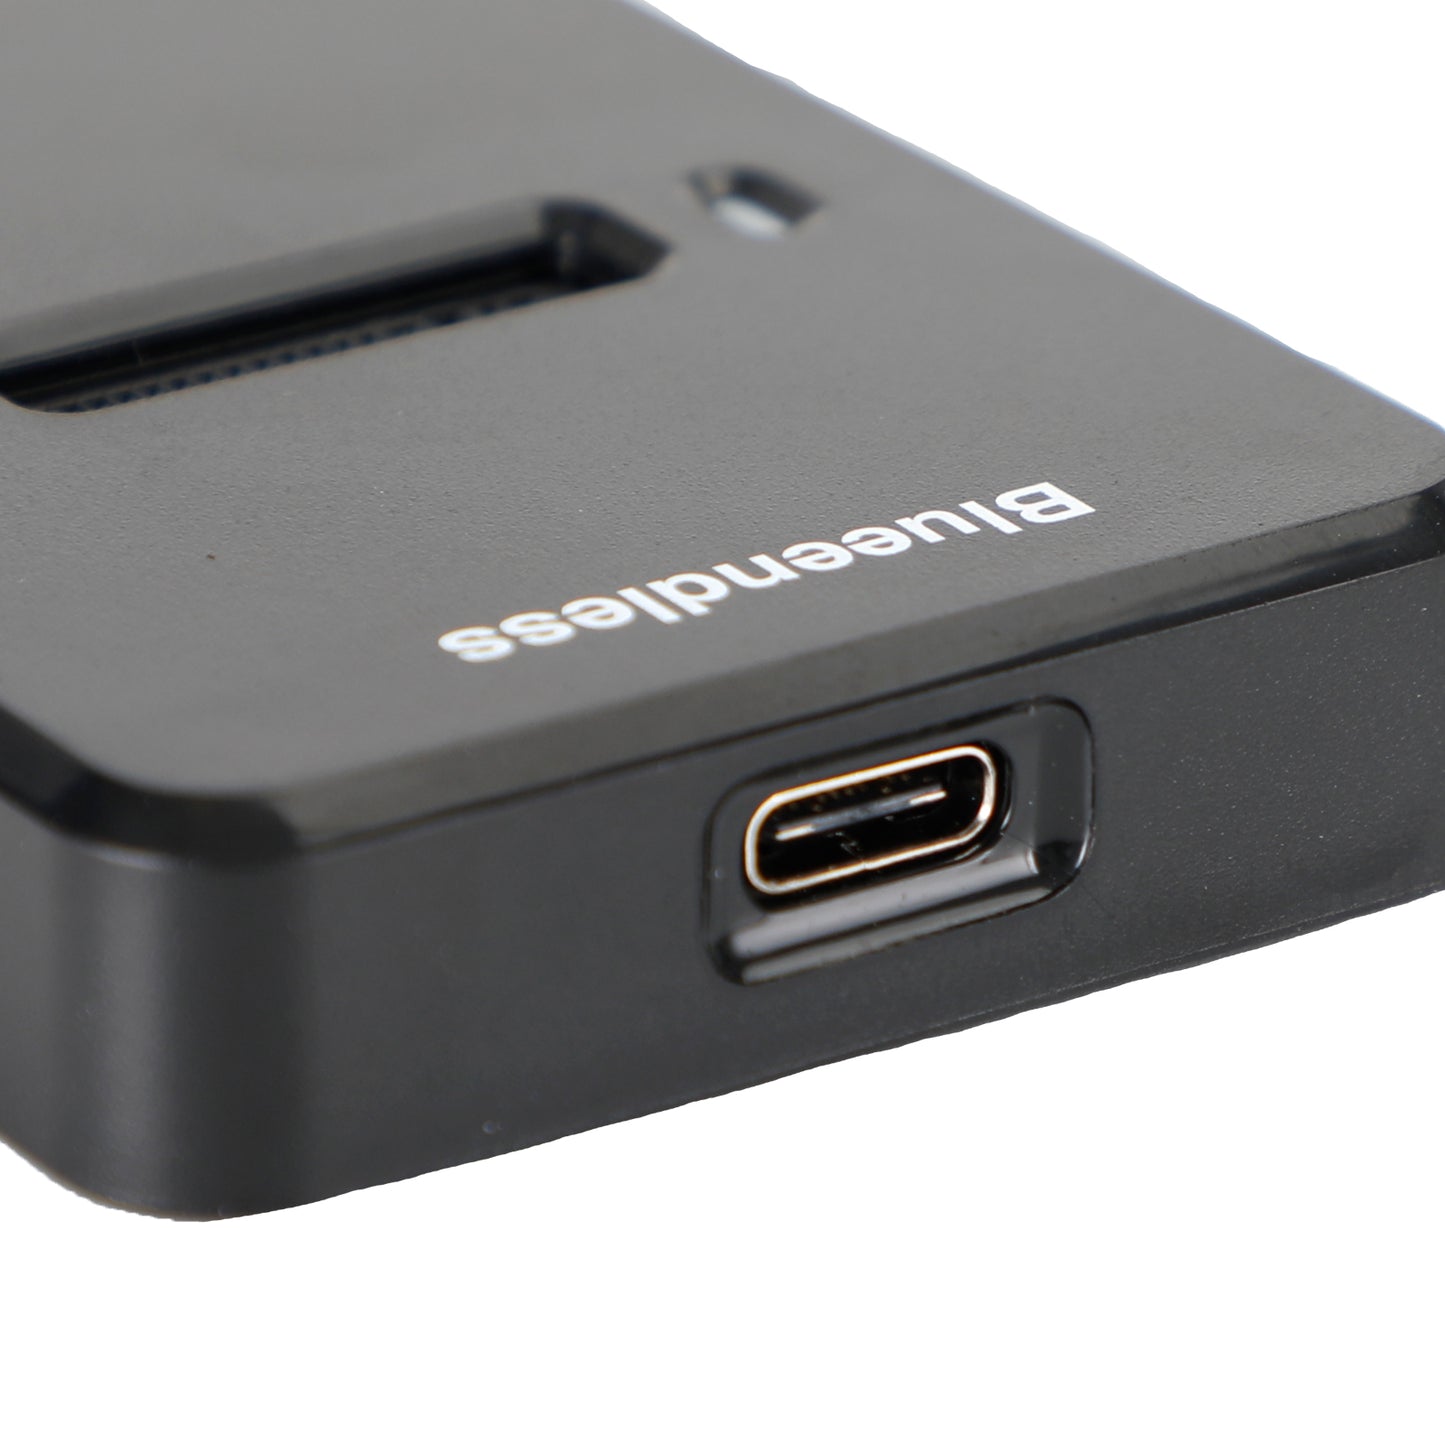 Dual Protocol SATA/NVME M.2 SSD Case USB 3.1 Gehäuse-Adapter Docking Station